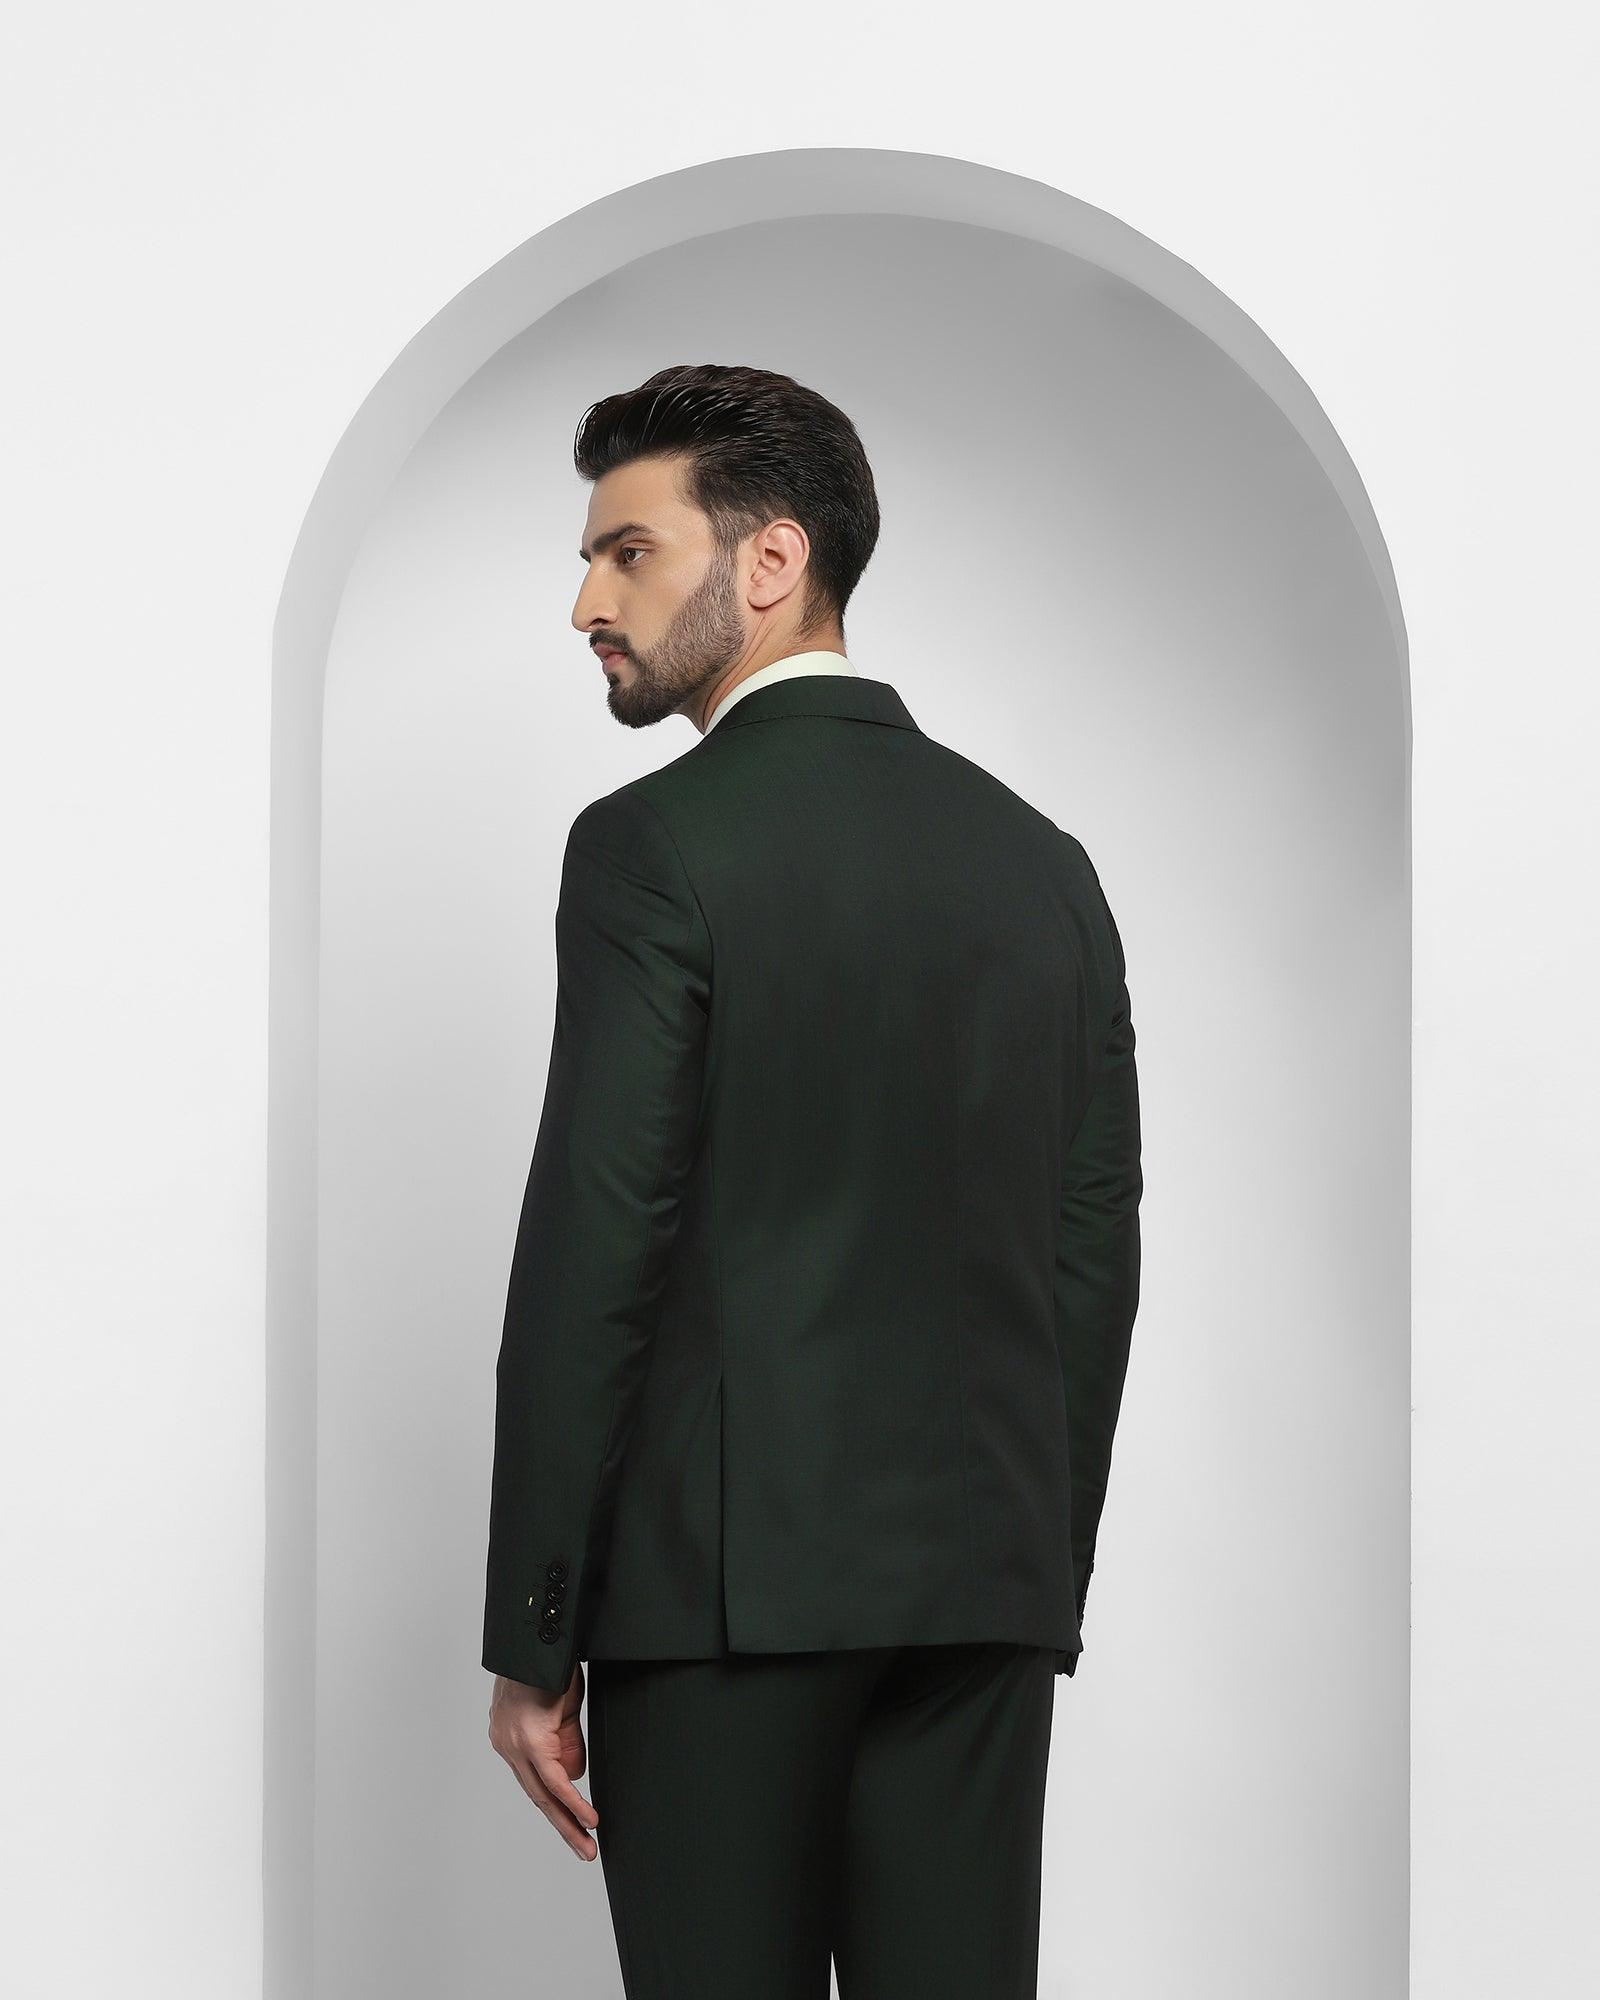 ASOS DESIGN skinny suit trousers in sage green | ASOS